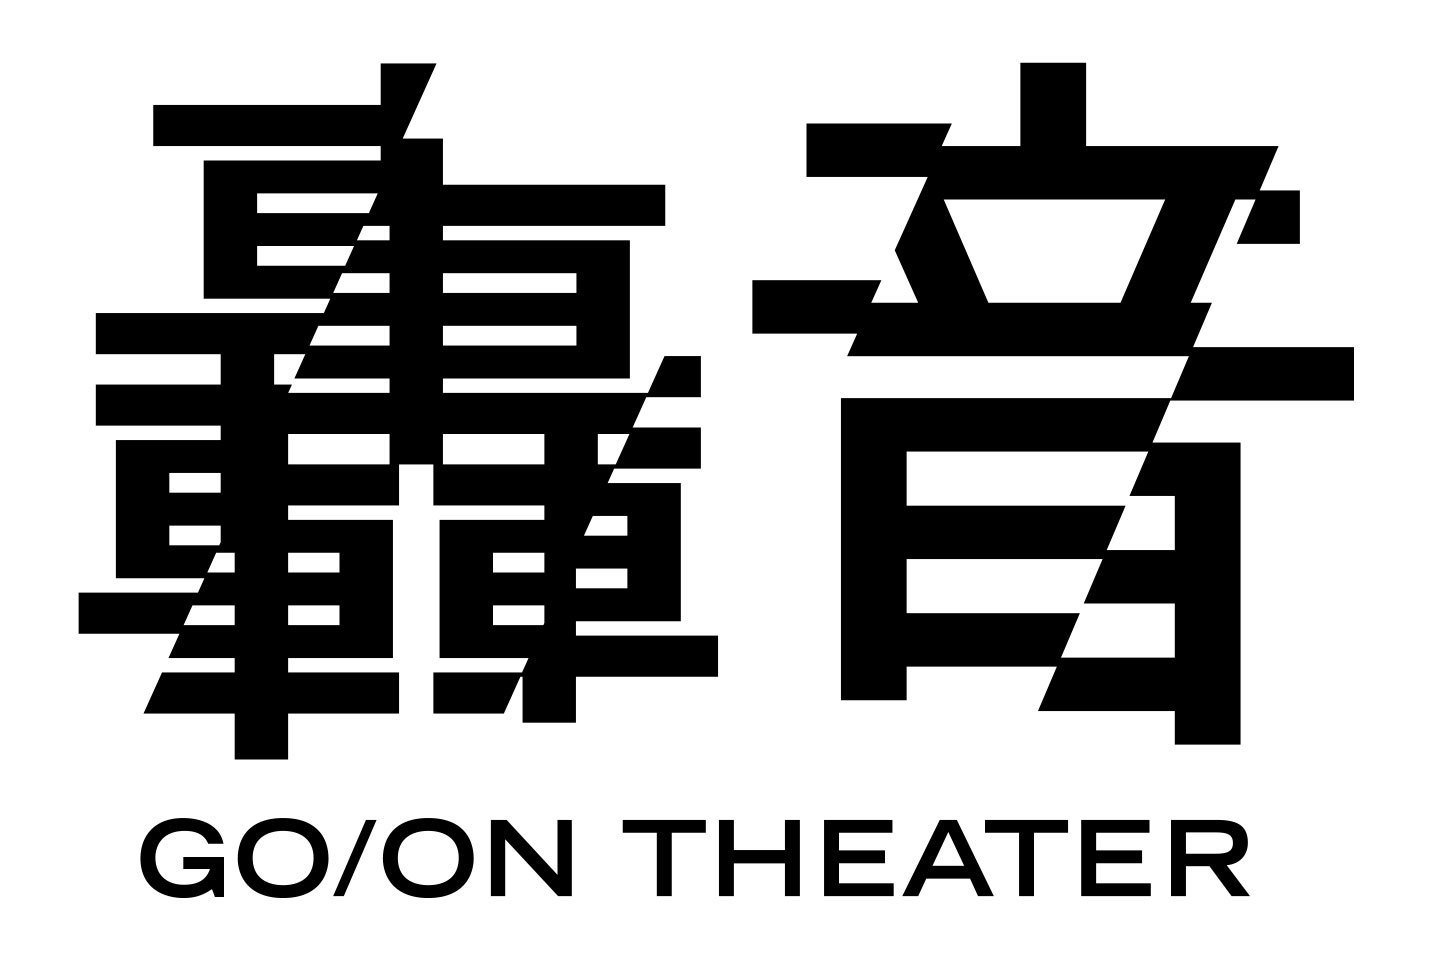 「TOHOシネマズ 轟音シアター」ロゴ (C) TOHO Cinemas Ltd. All Rights Reserved.